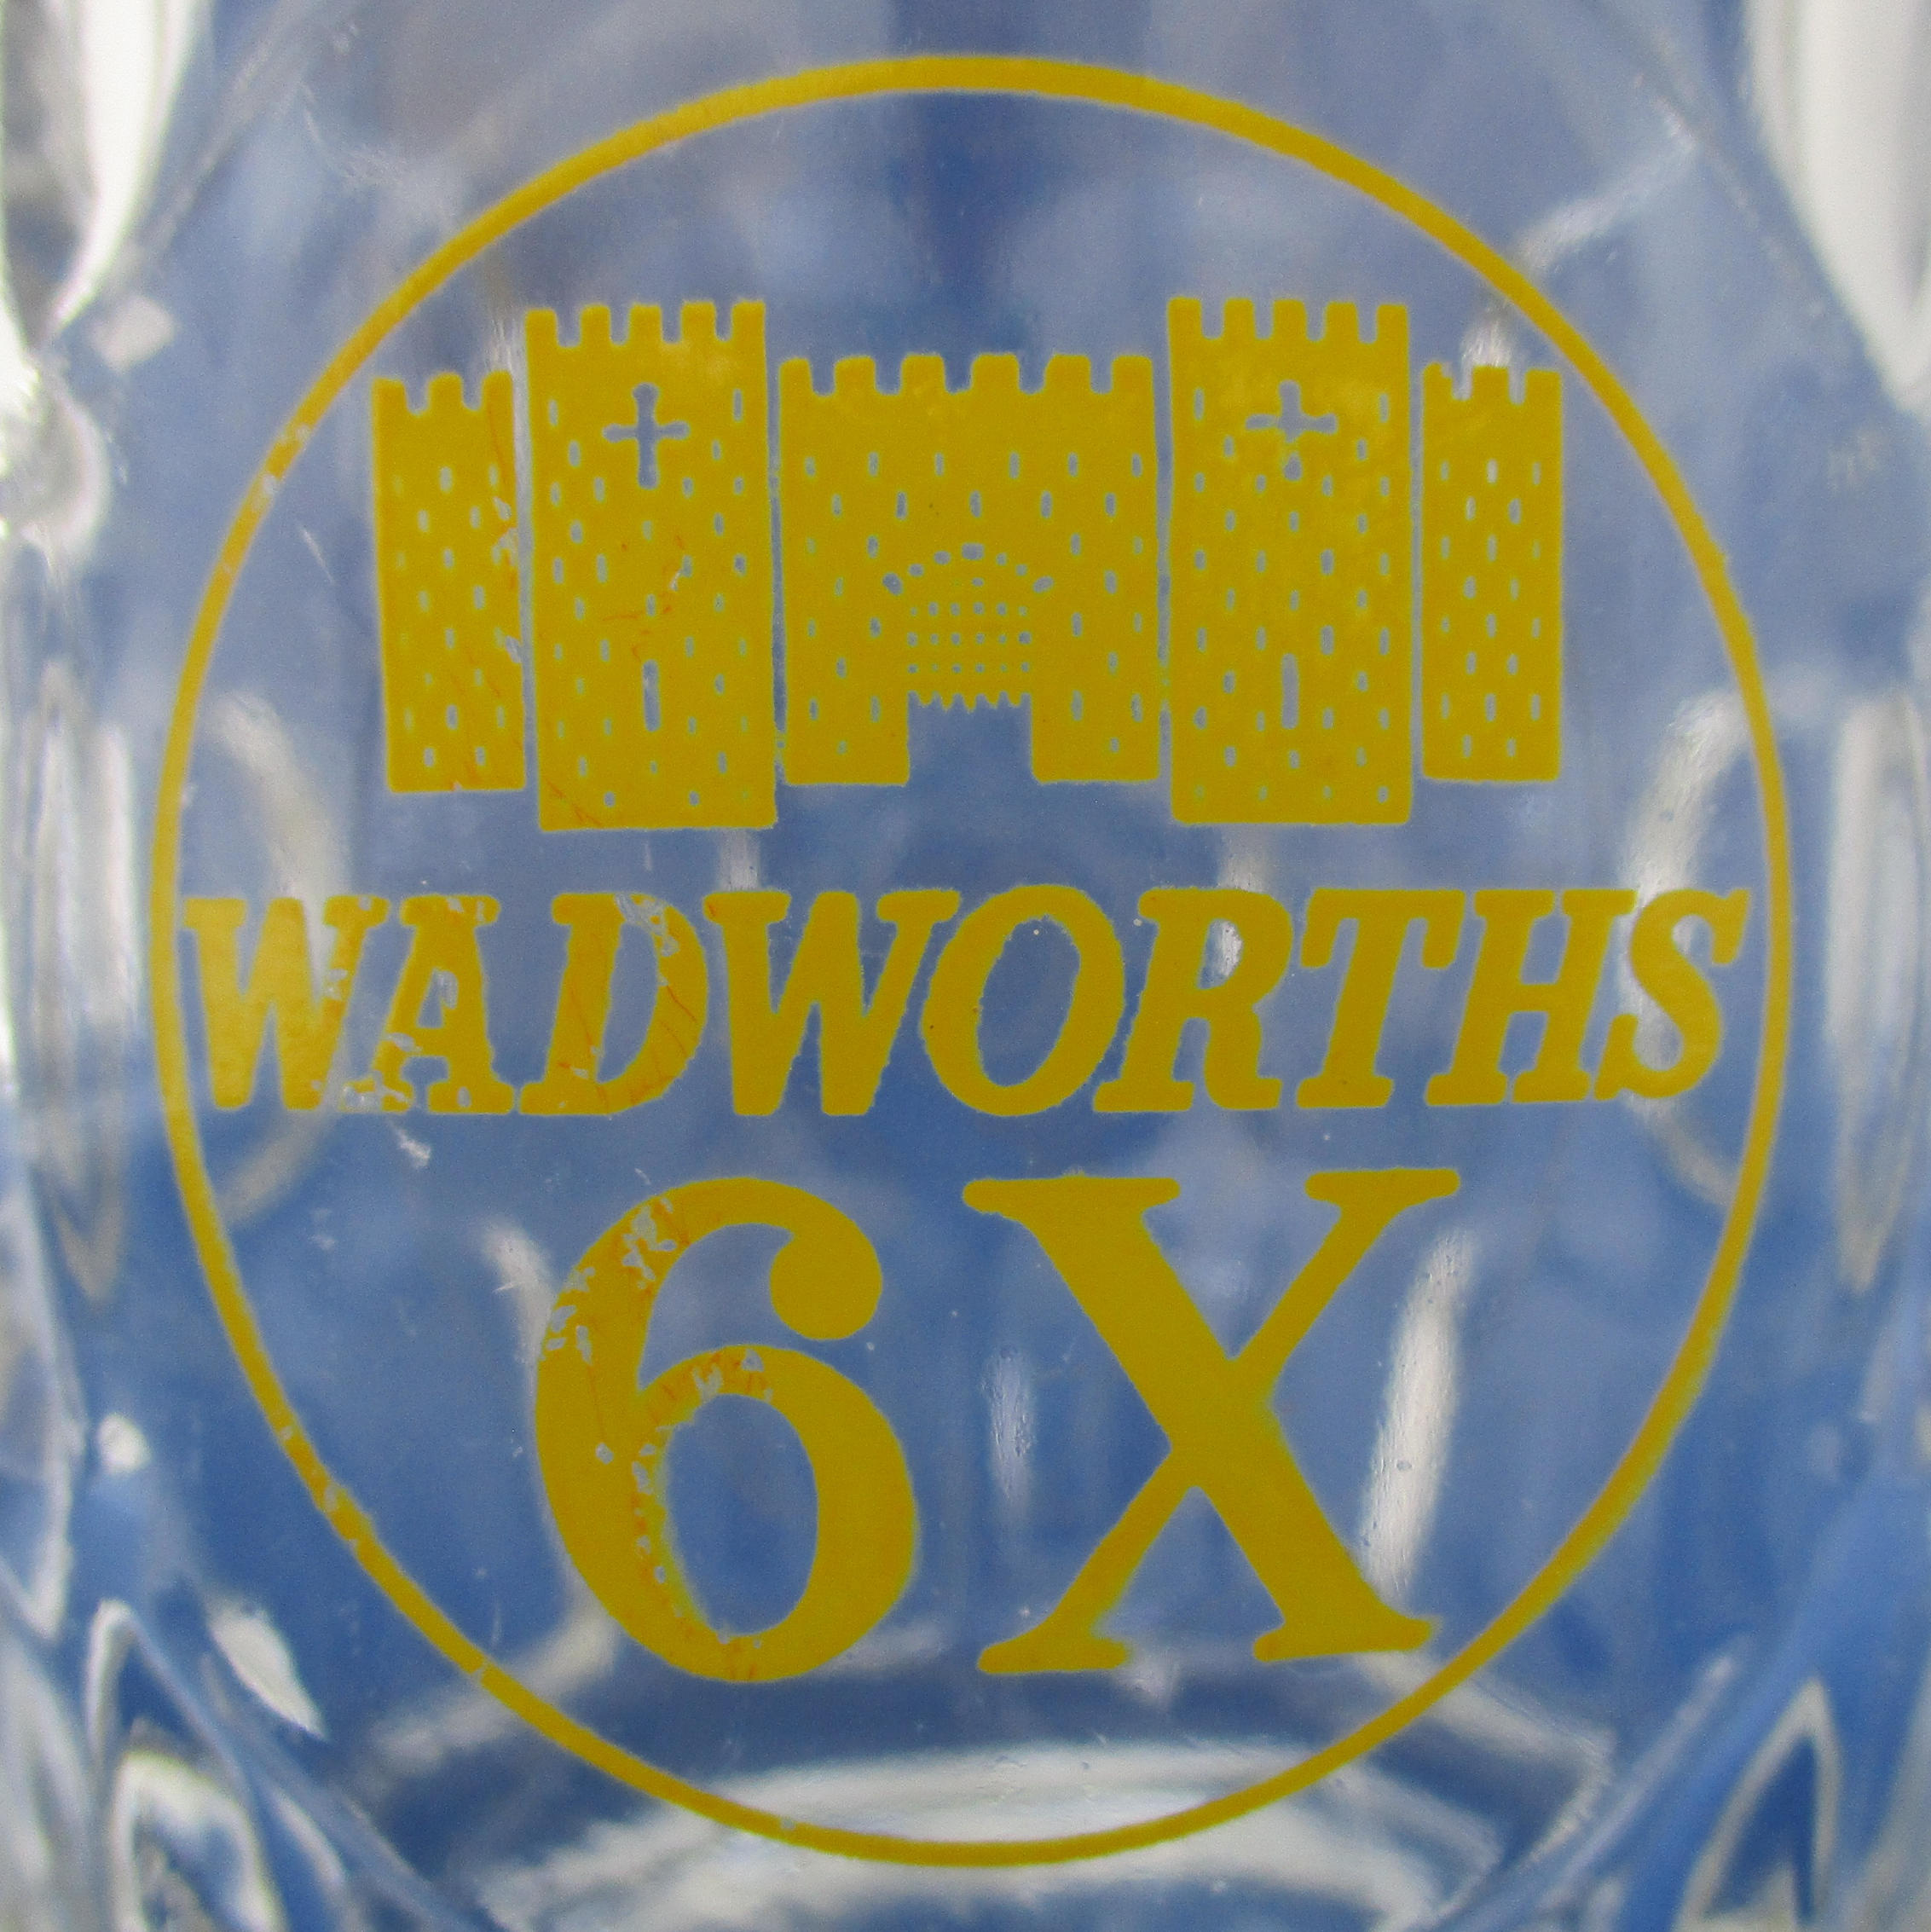 Old Wadworth Logo